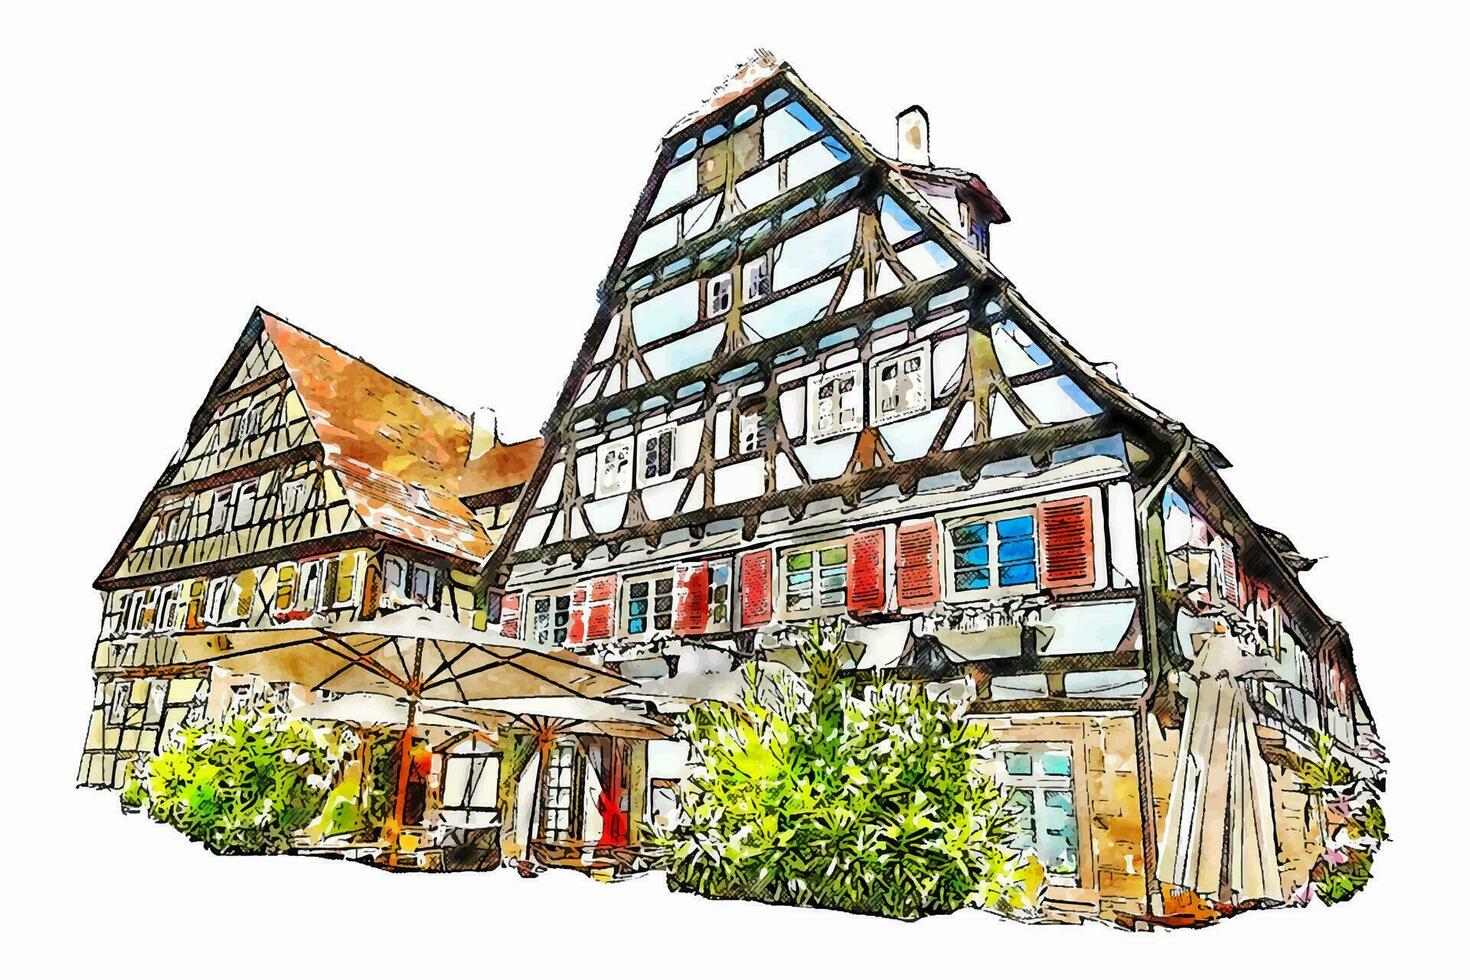 Kloster maulbron Alemania acuarela mano dibujado ilustración aislado en blanco antecedentes vector